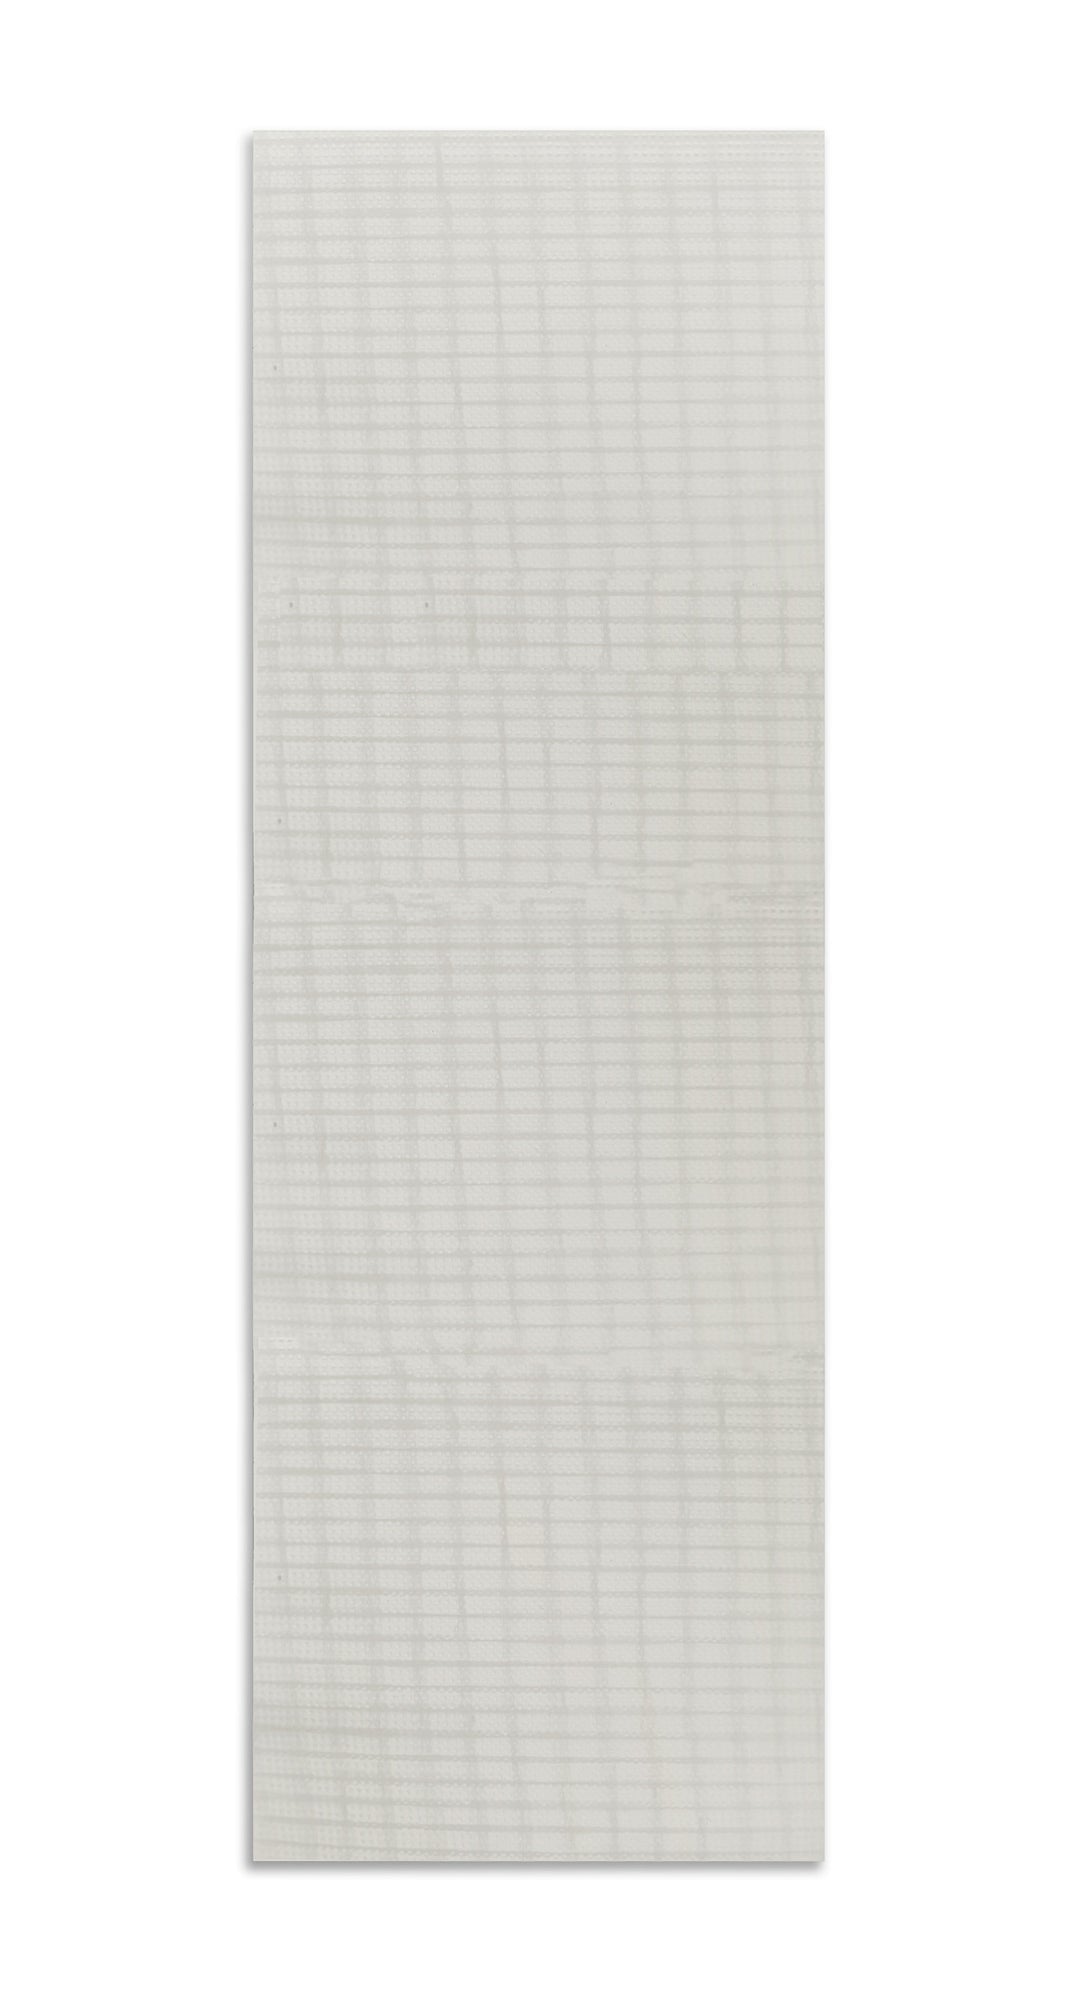 Teak Tuning Gecko Grip Tape, Smooth Urethane Edition (Semi-Transparent) - 35mm x 110mm